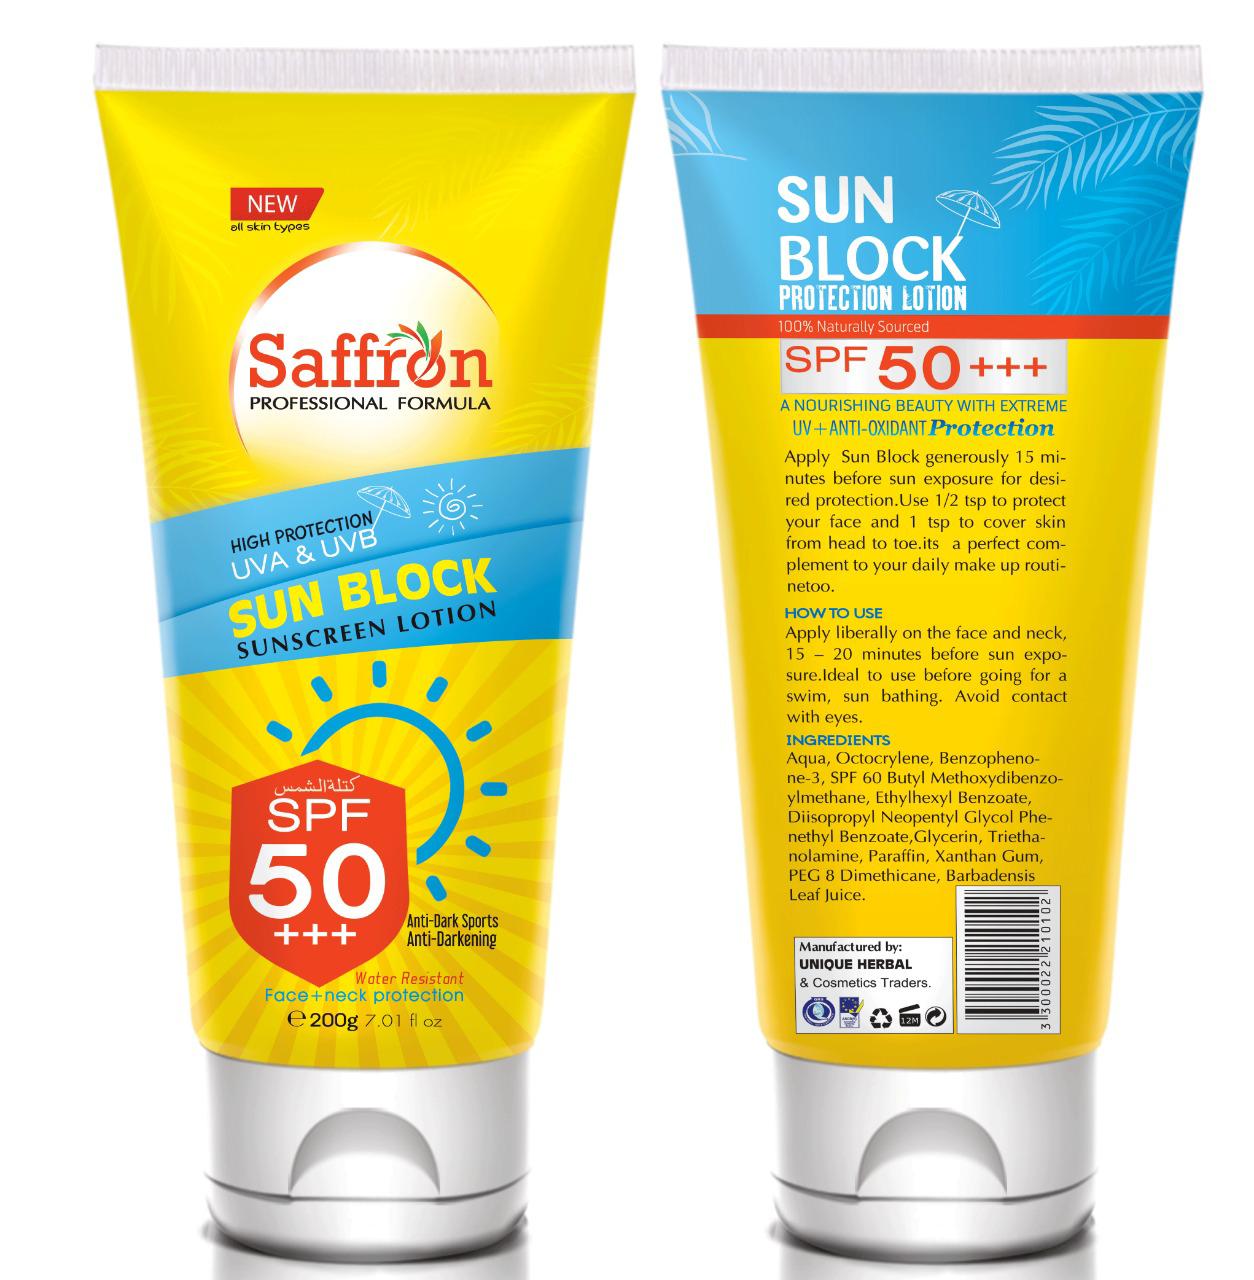 Saffron High Protection UVA & UVB Sun Block Sunscreen Lotion 200g